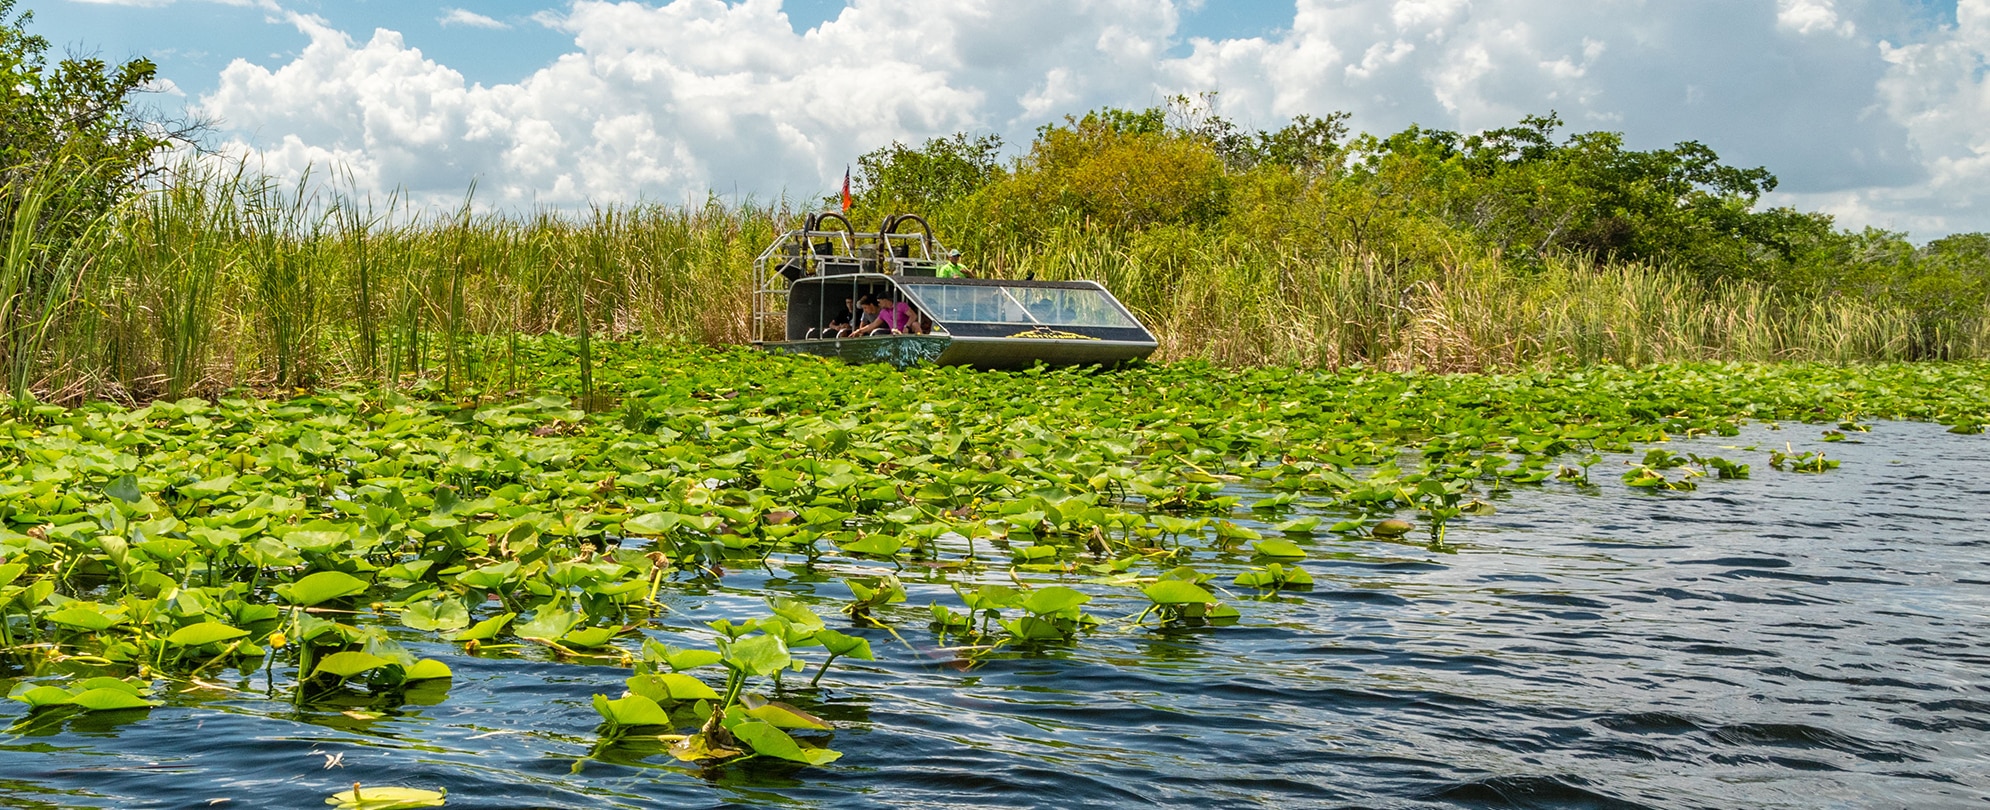 Airboat tour in Eveglades national park, Florida, USA